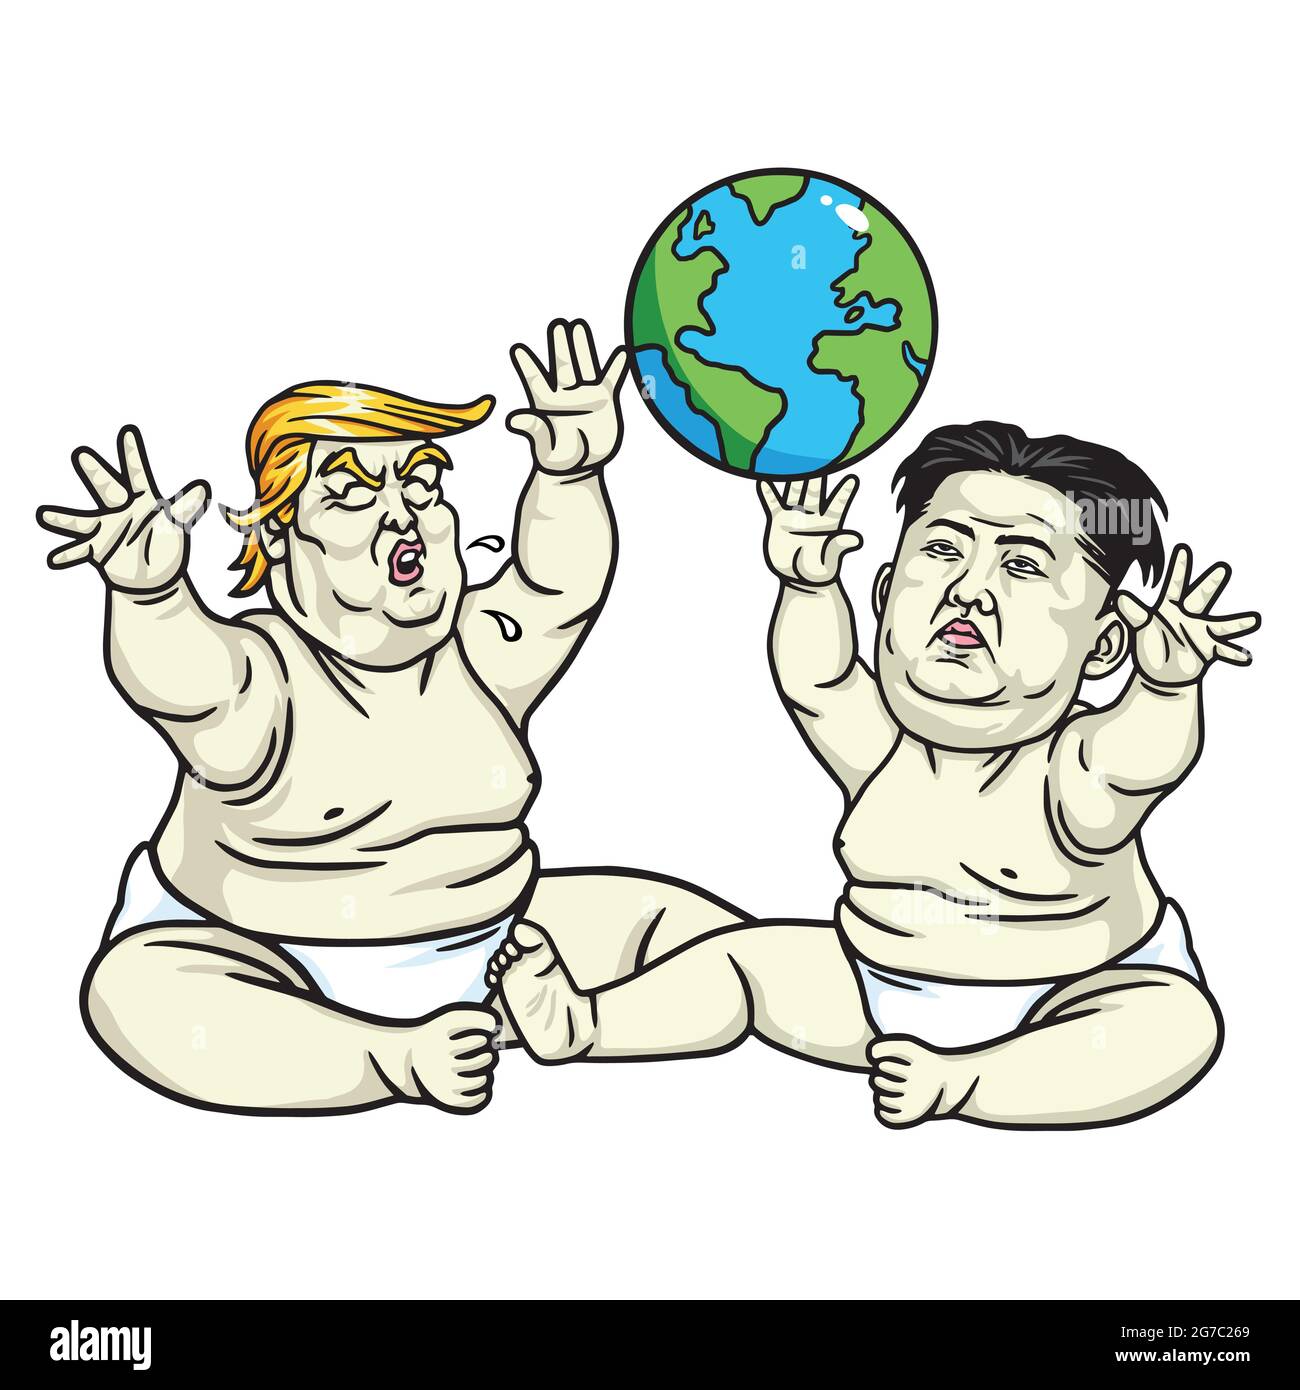 Baby Trump und Kim Jong-un spielen den Globus. Cartoon-Illustration Stock Vektor